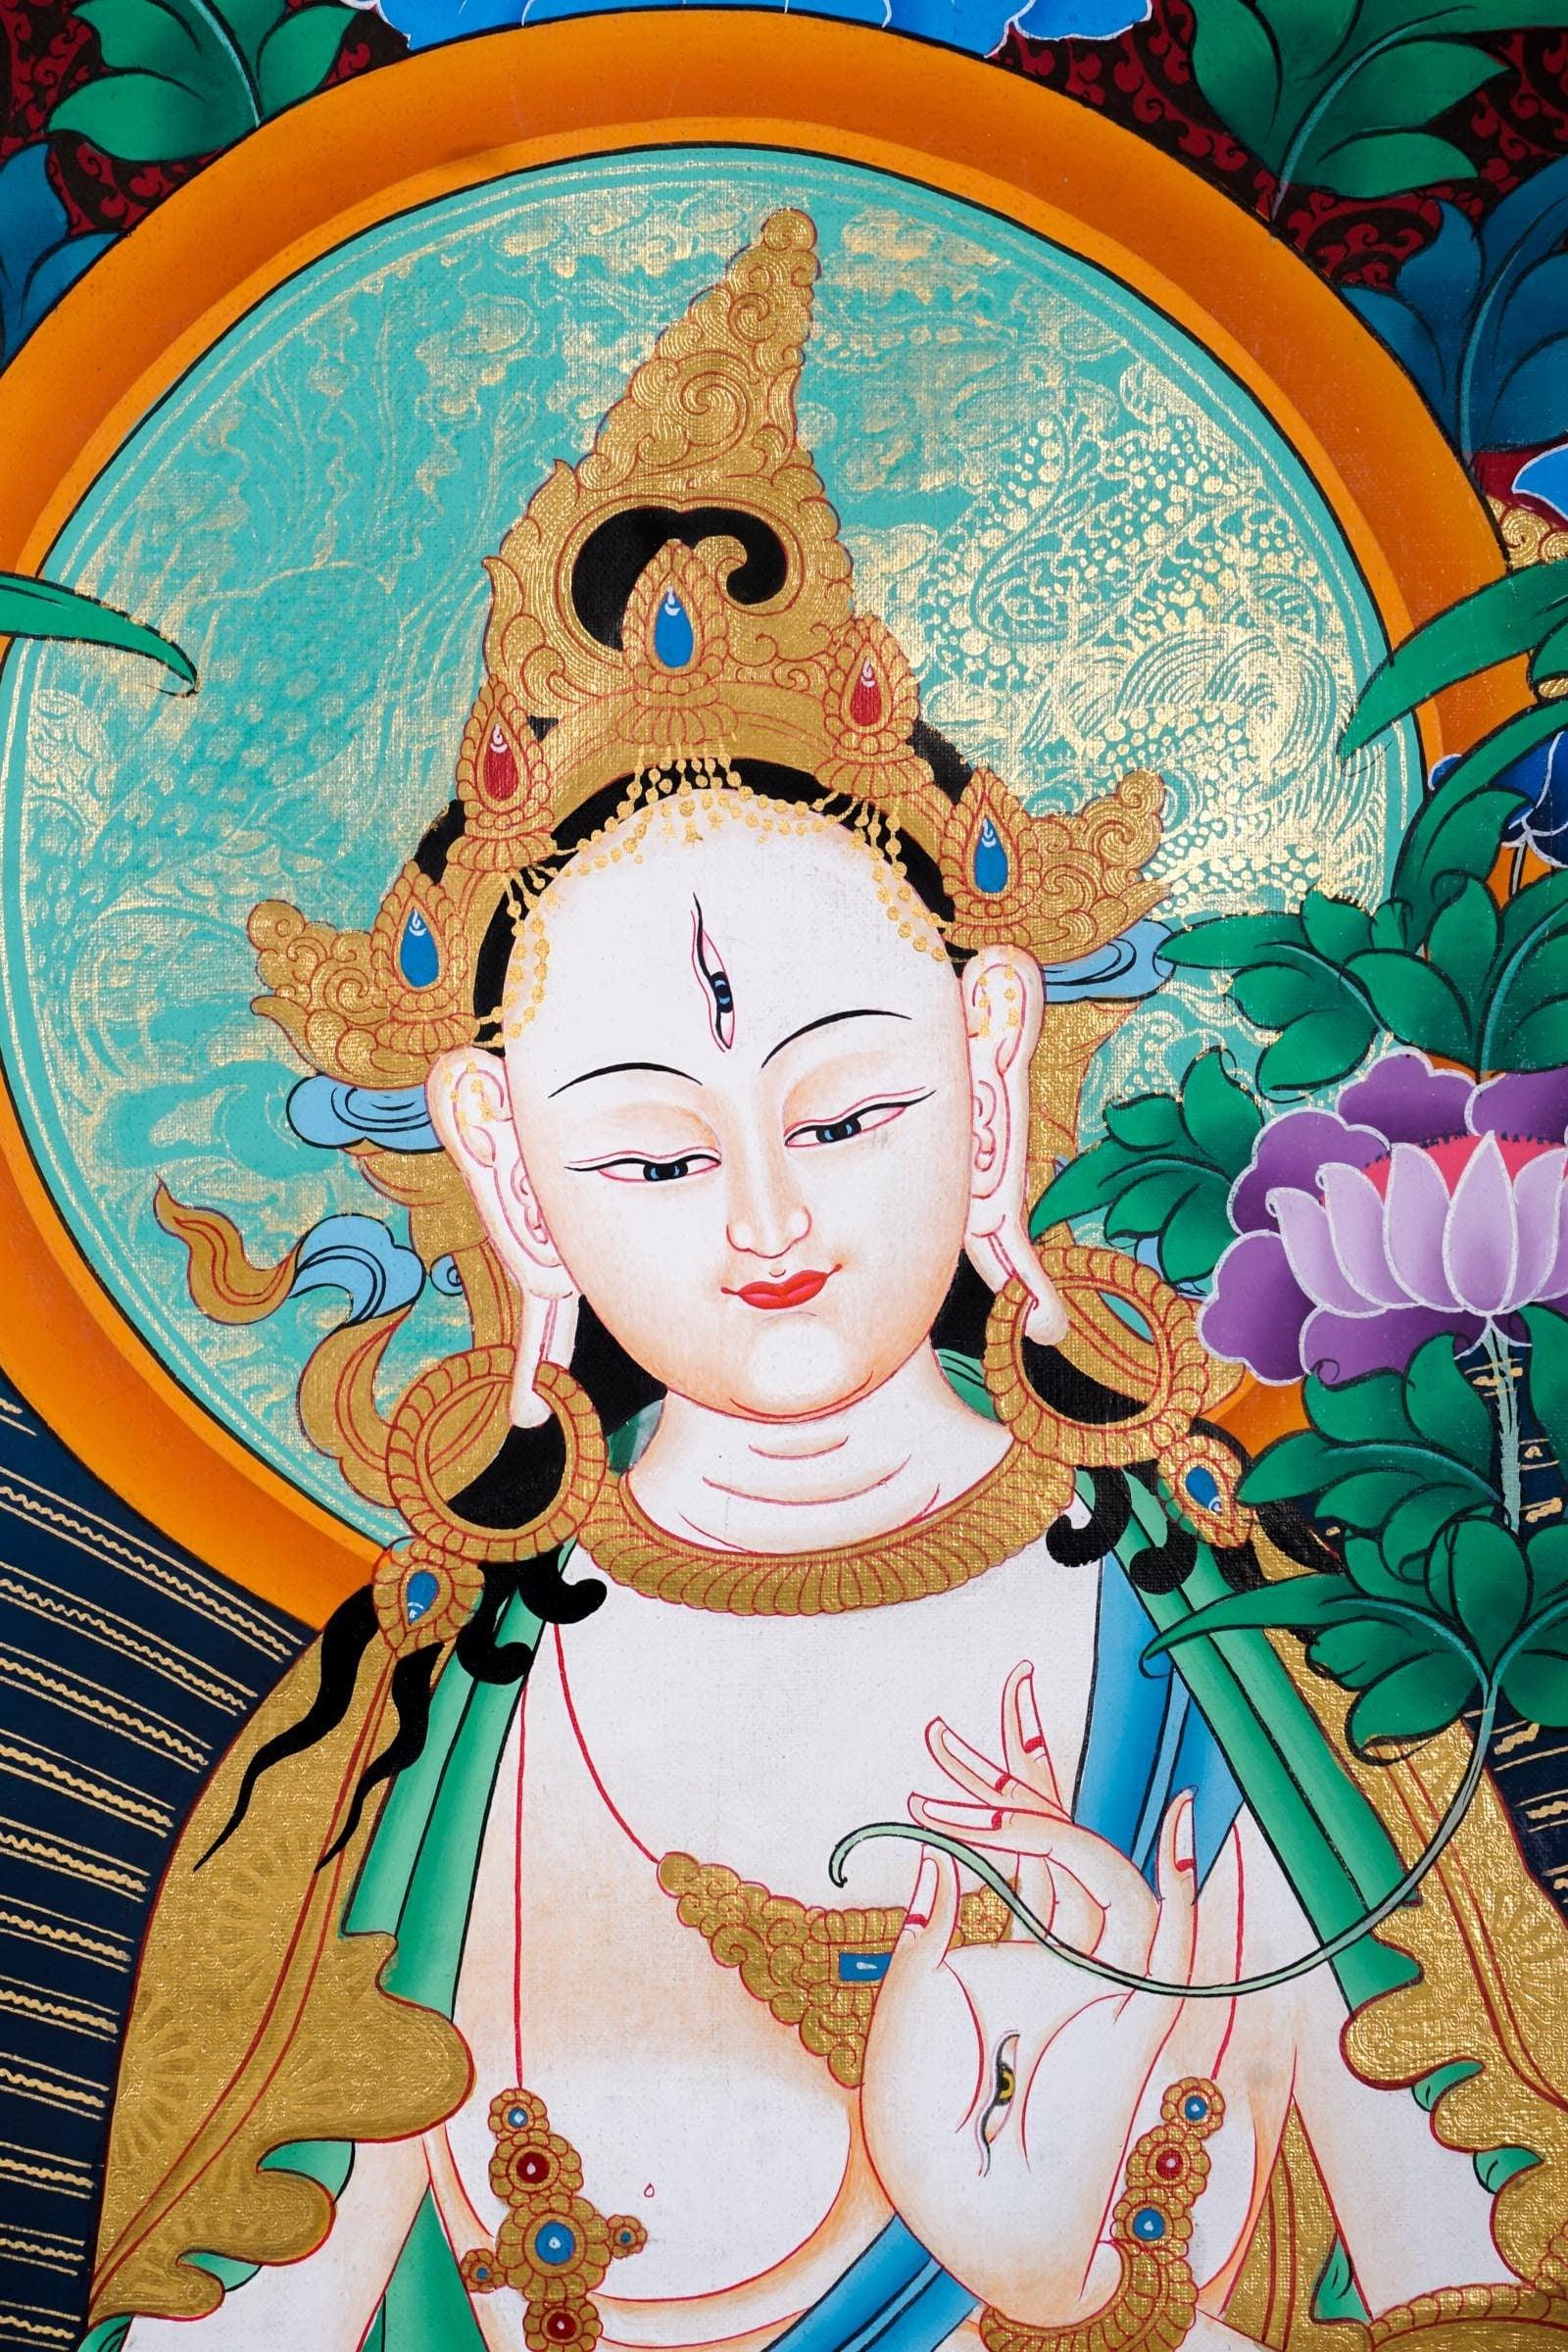 White Tara Thangka Painting For Meditational Practice and Spiritual Gifts